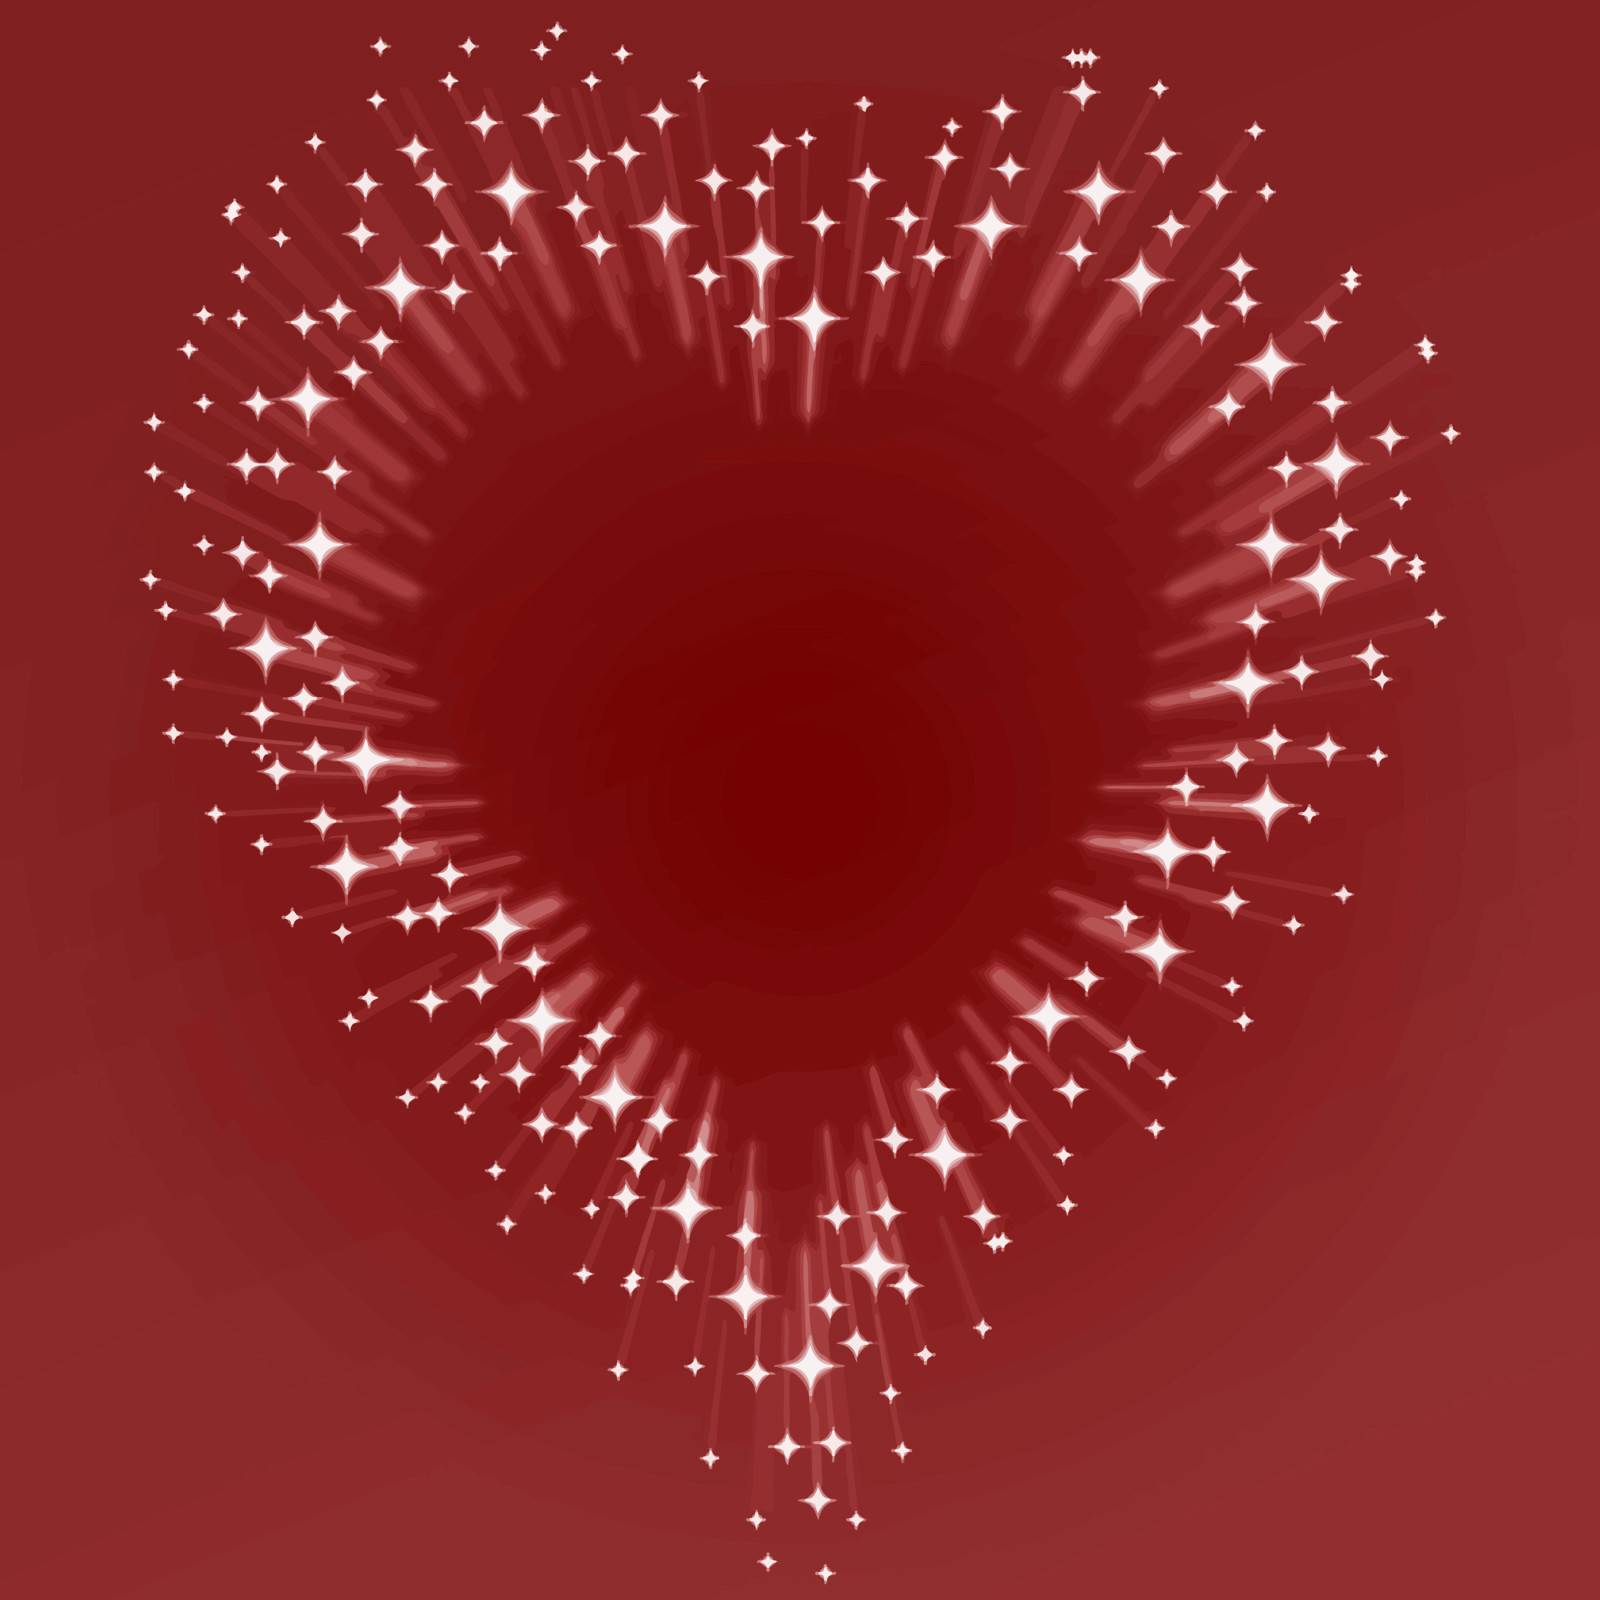 love heart on red made of bursting stars